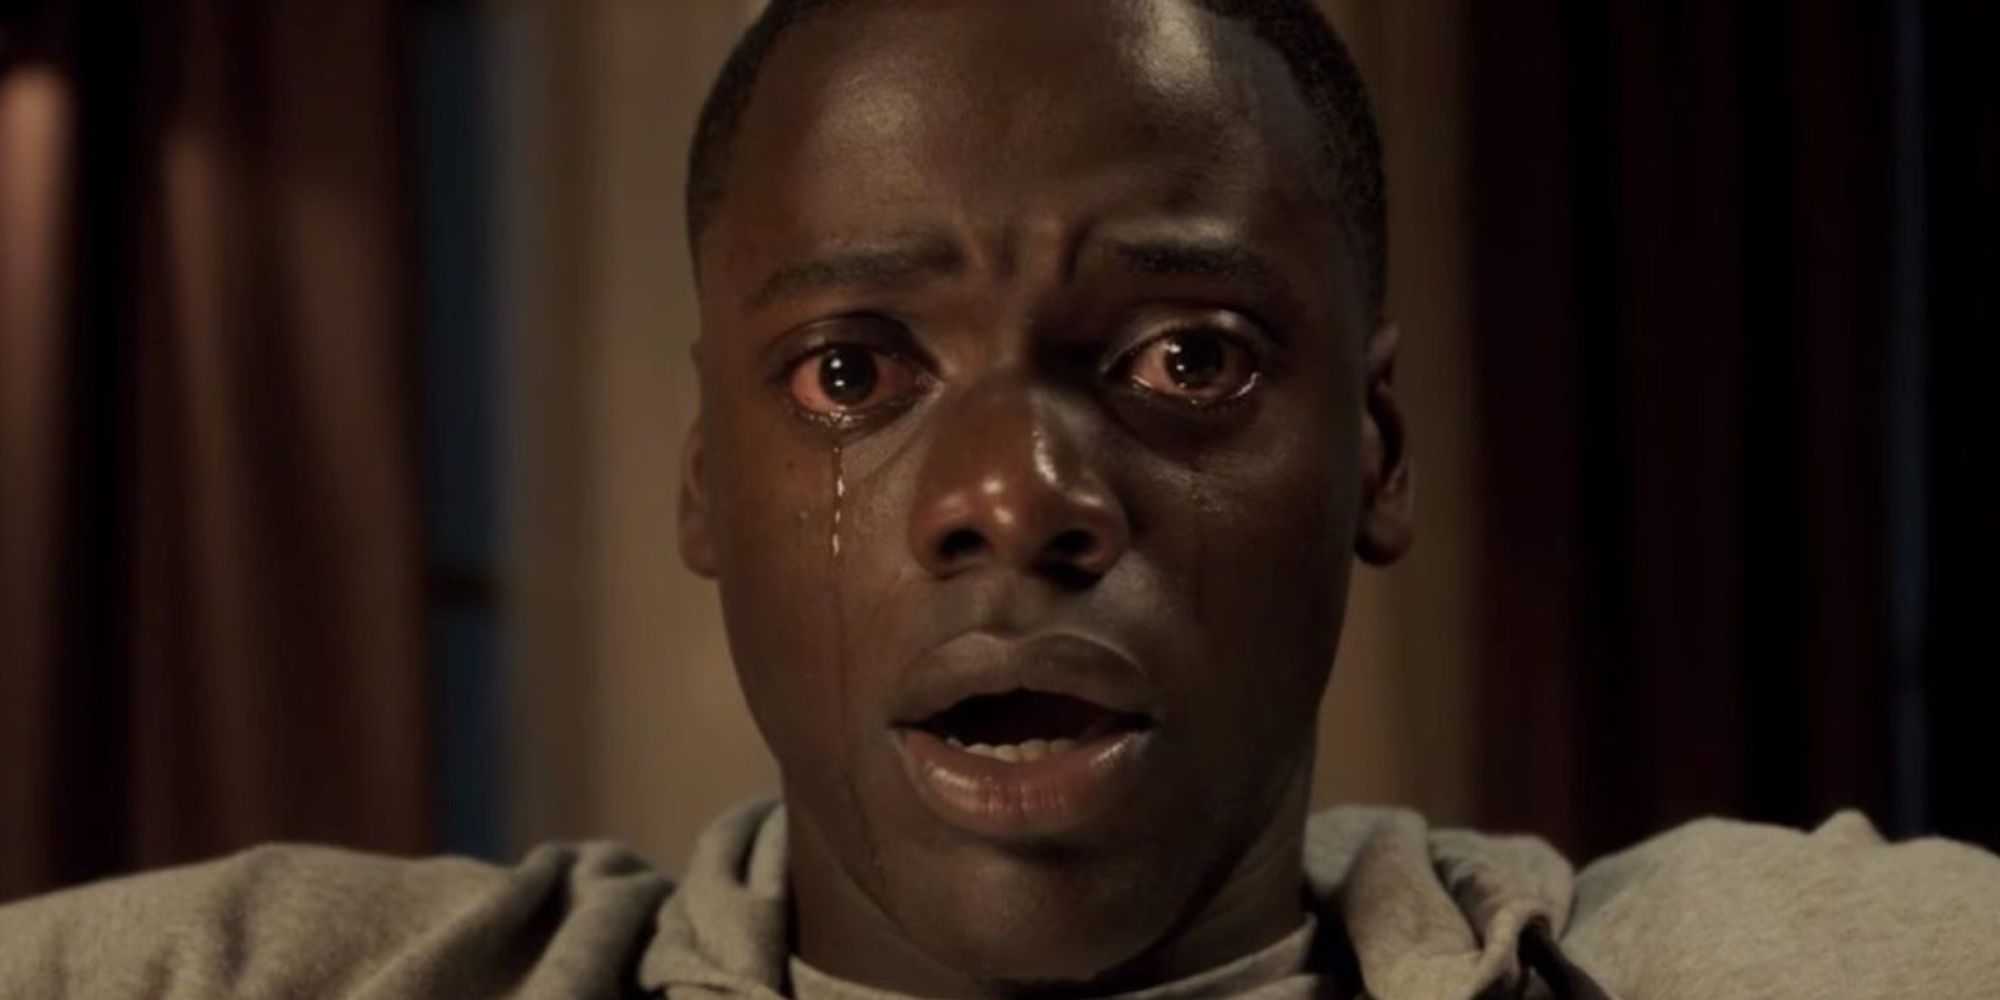 Daniel Kaluuya as Chris Washington crying and looking shocked in Get Out.